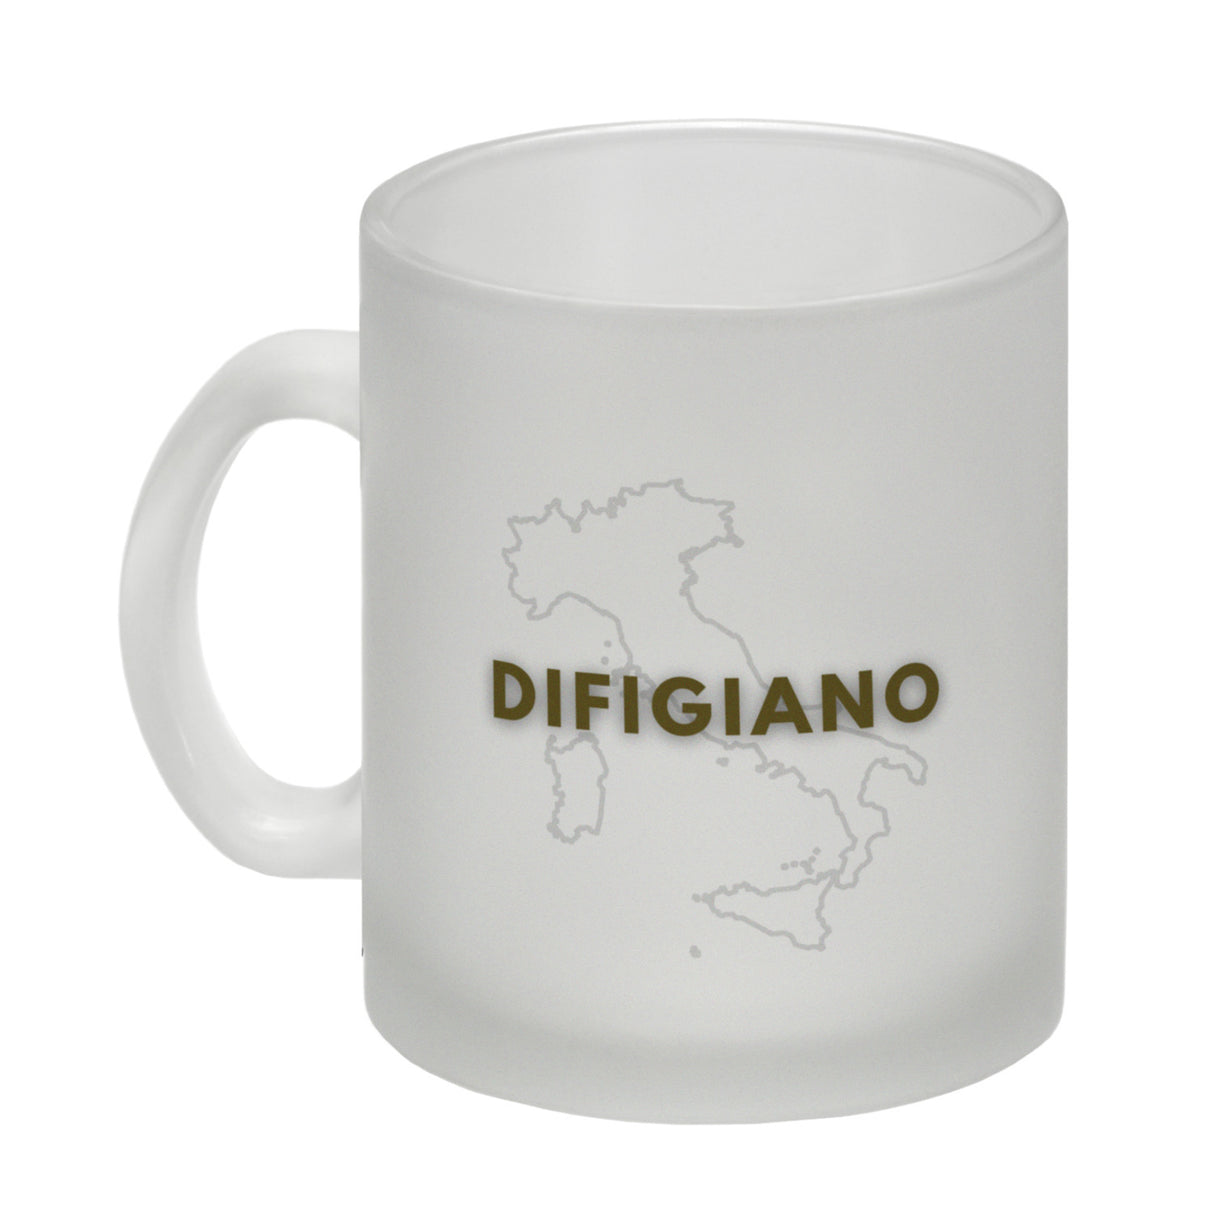 Difigiano Di-Fig-I-A-No Dialekt Kaffeebecher